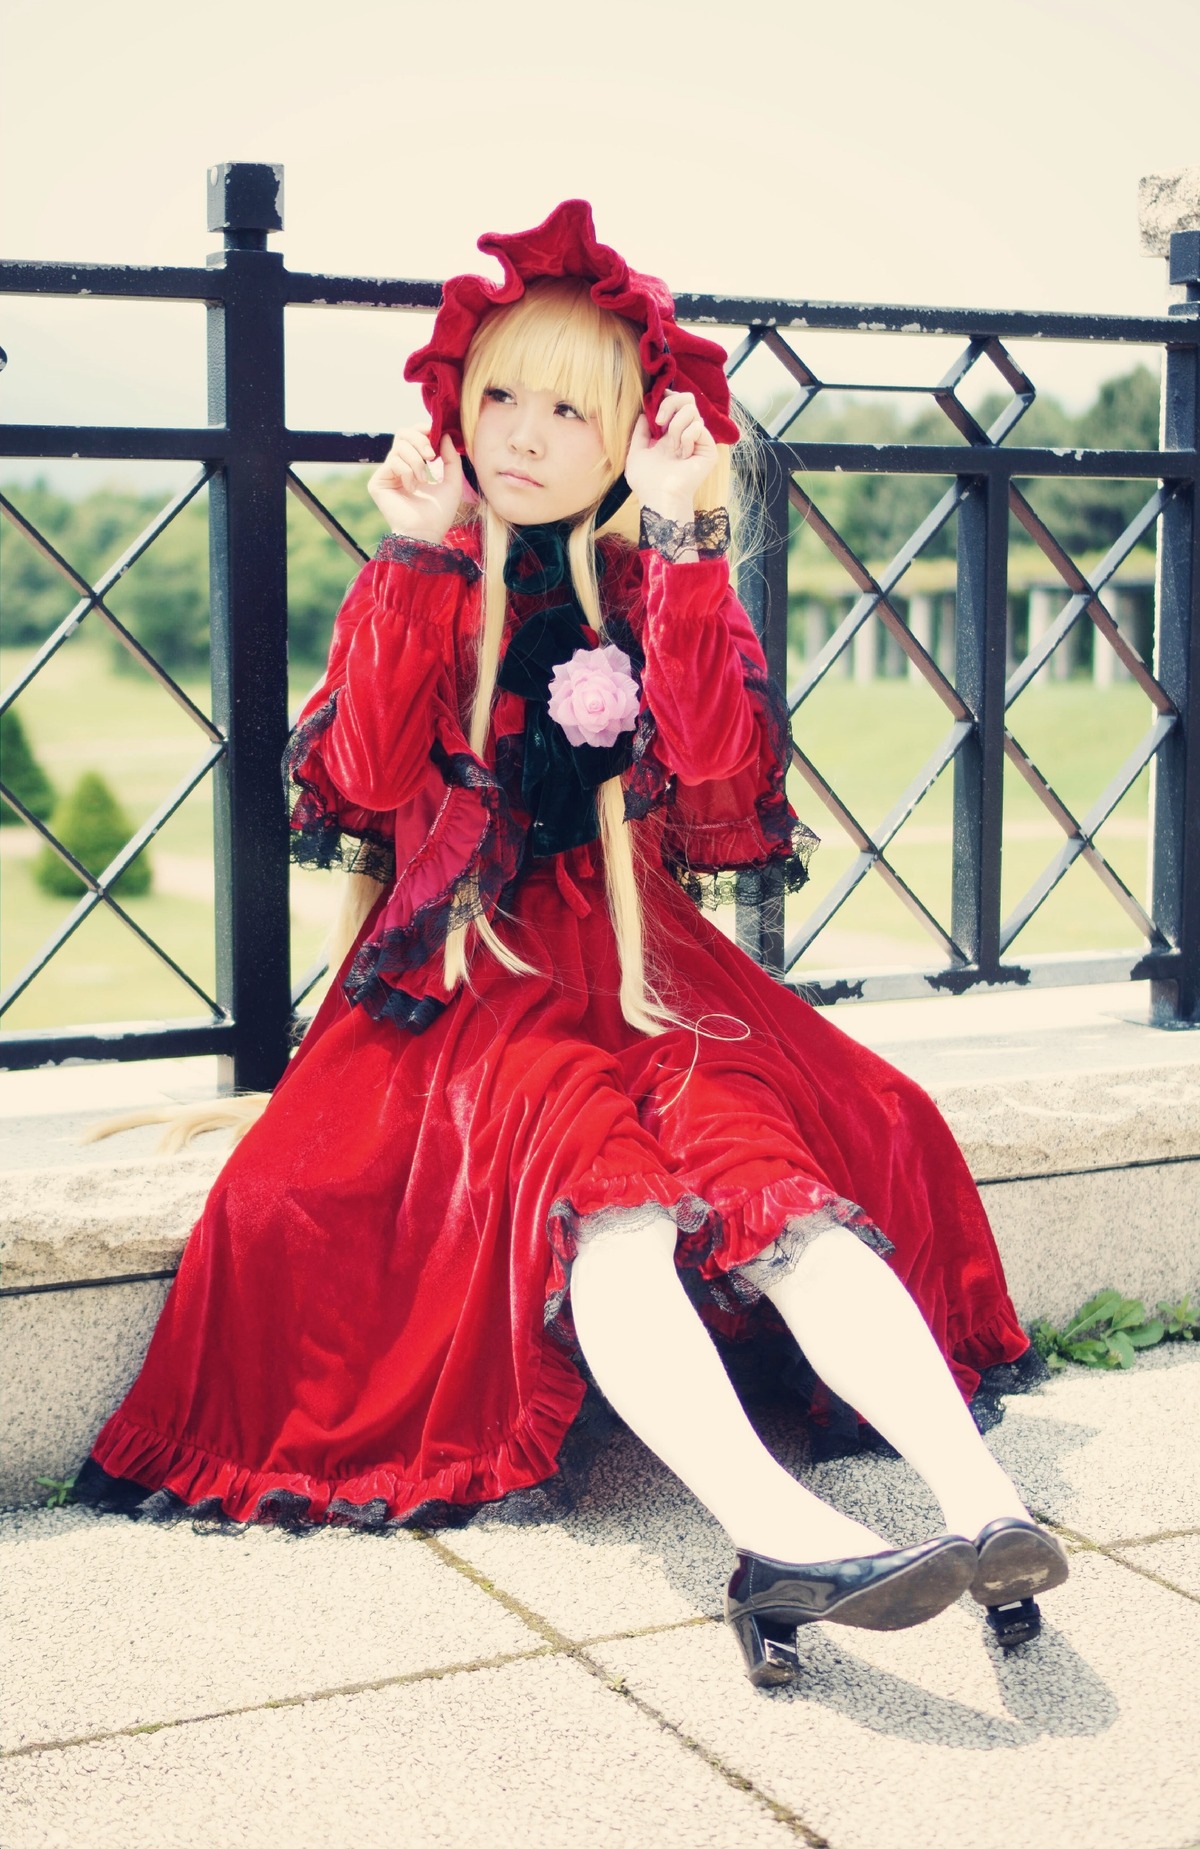 1girl blonde_hair bonnet bow dress flower frills long_hair red_dress rose shinku shoes sitting solo tiles window